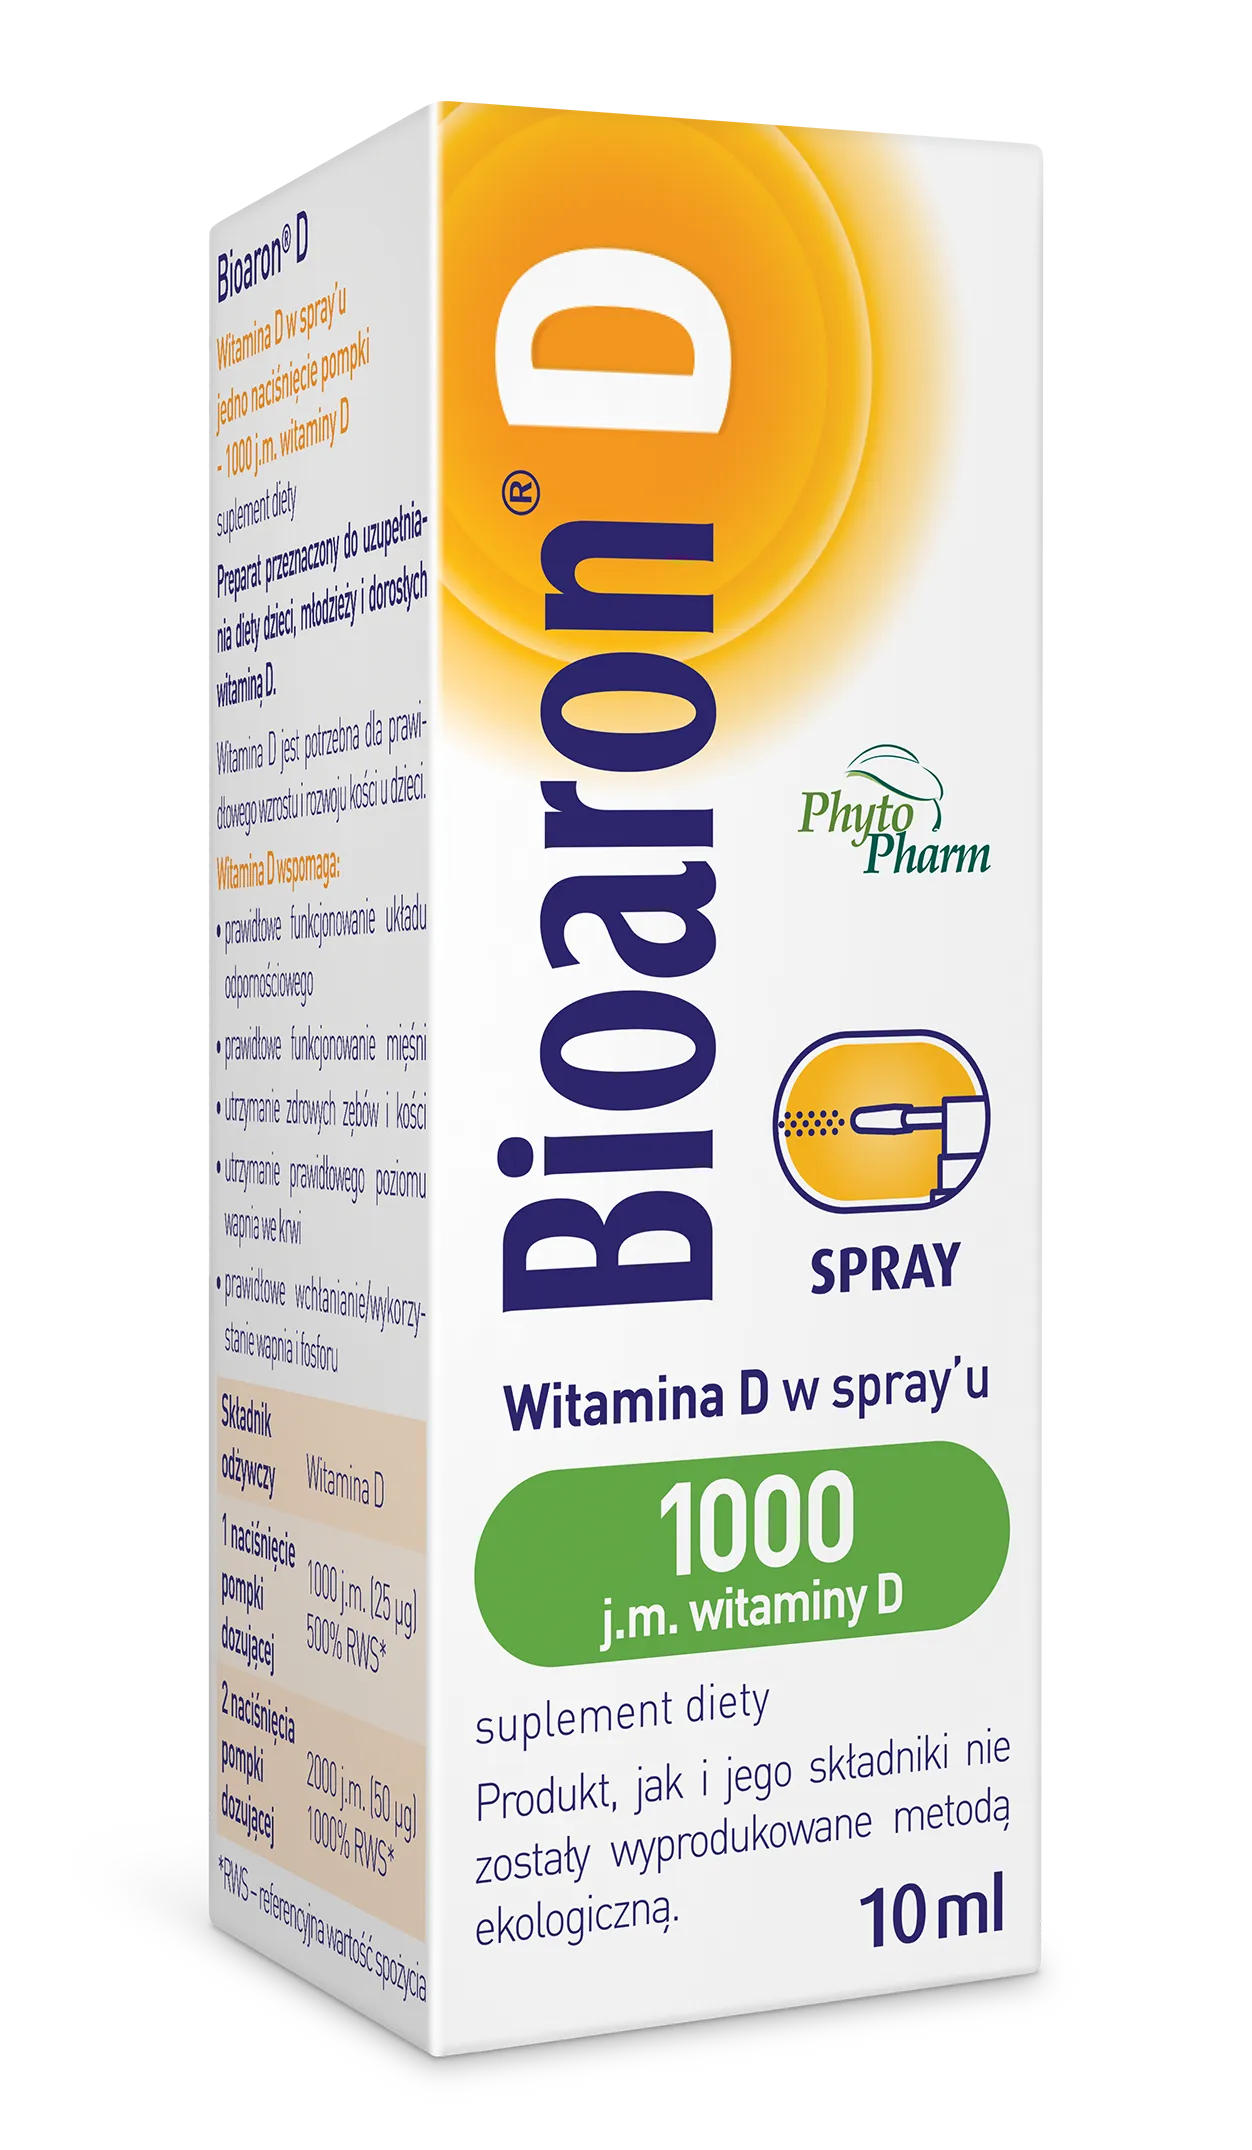 Biaron D, spray 1000 j.m., 10ml